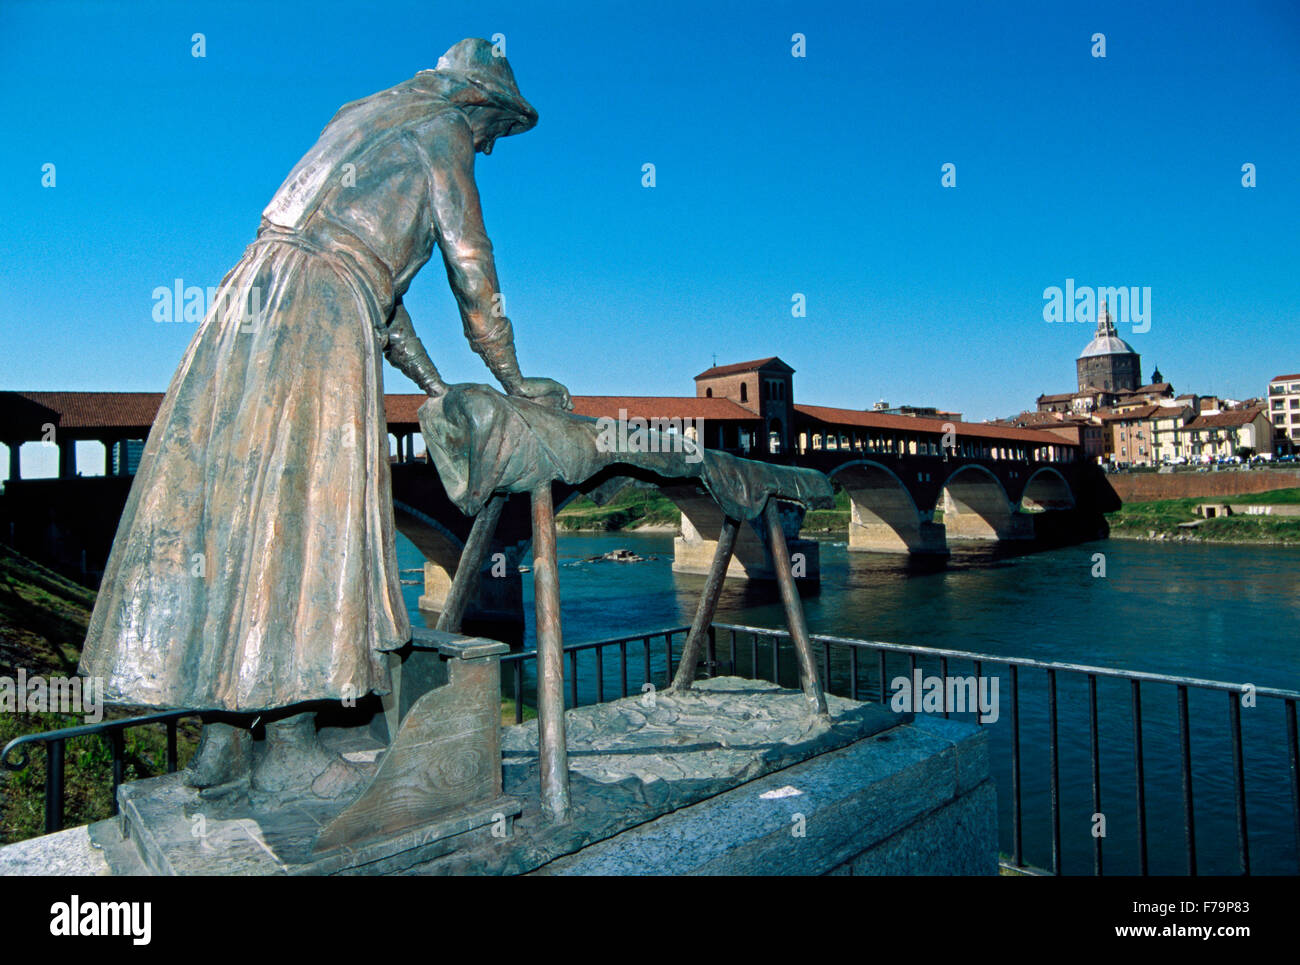 Italy, Lombardy, Pavia, Ticino River, Covered Bridge and the Monumento alla Lavandaia. Stock Photo